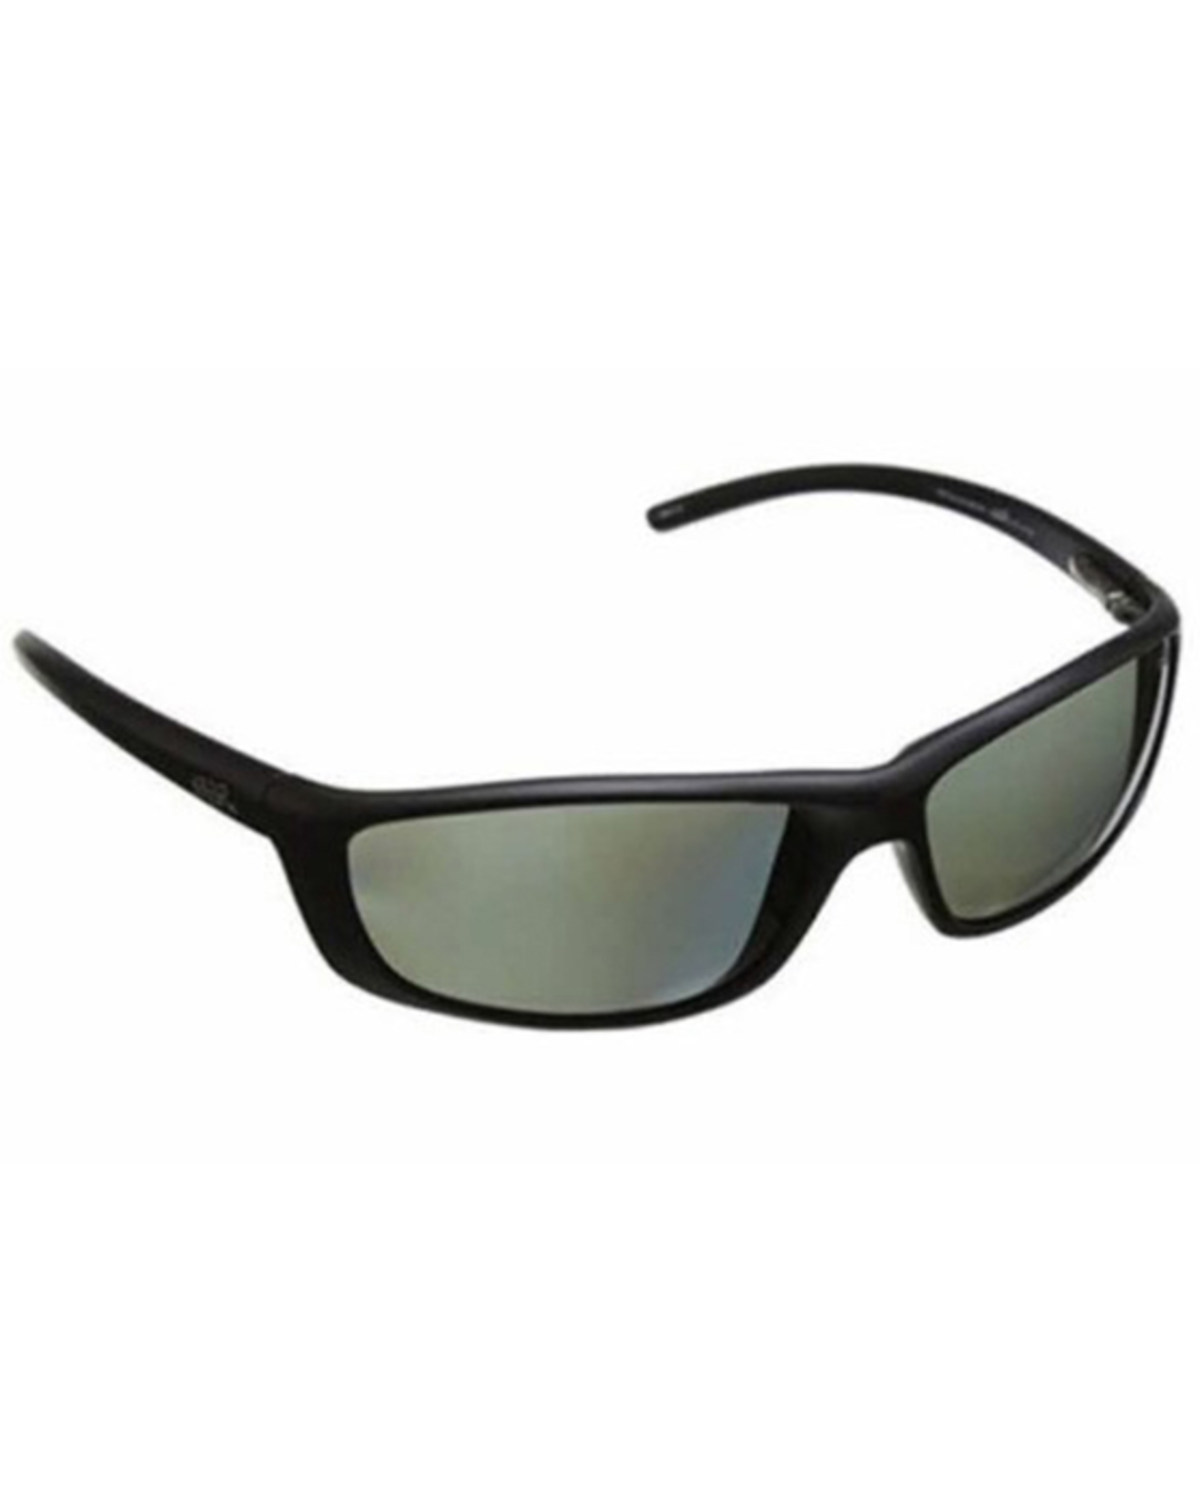 Hobie Men's Satin Sightmaster Plus Sunglasses